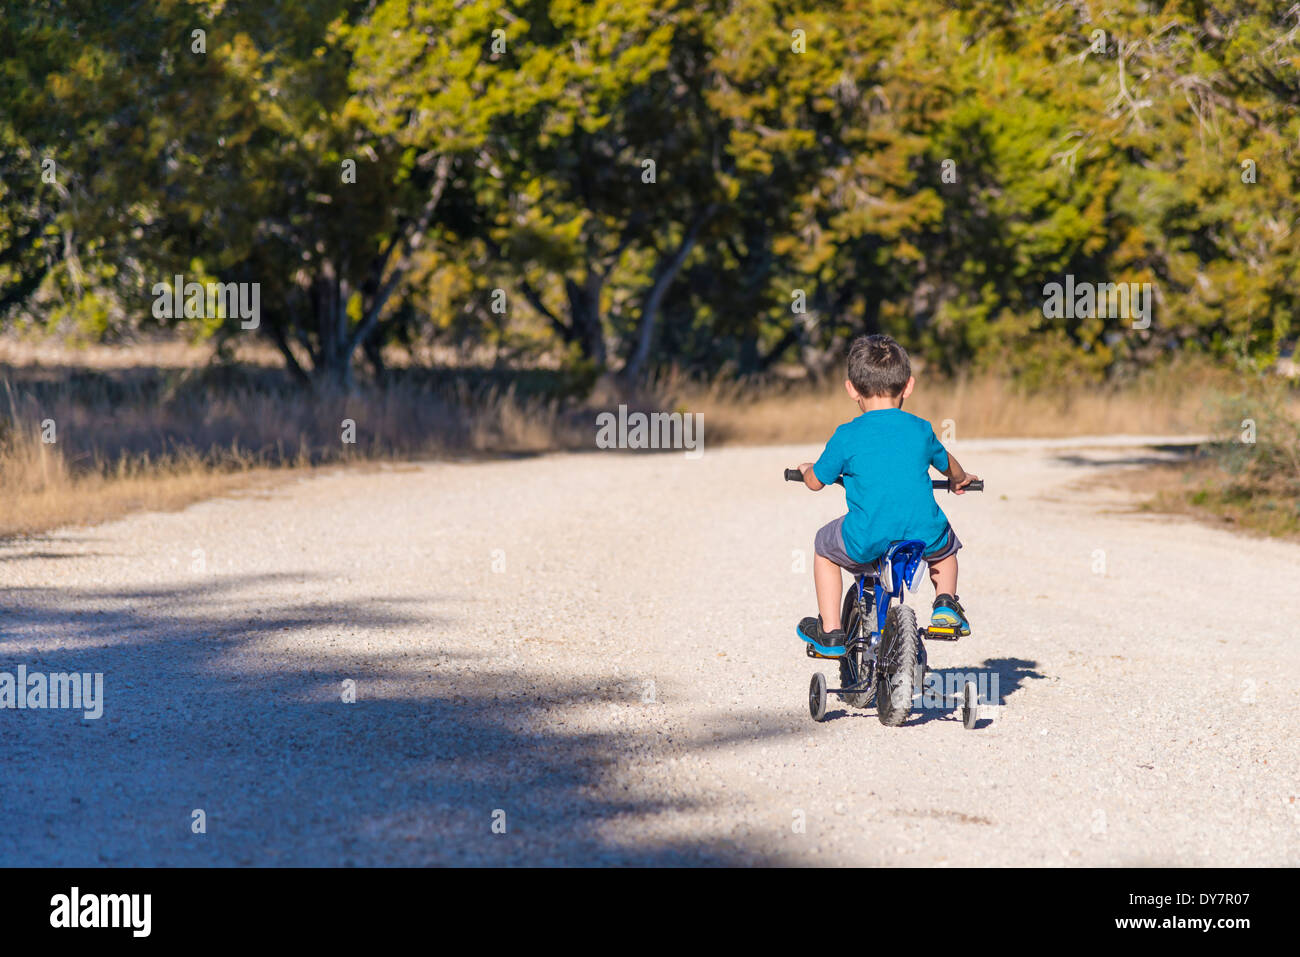 USA, Texas, Little boy riding bike with stabilisers Stock Photo